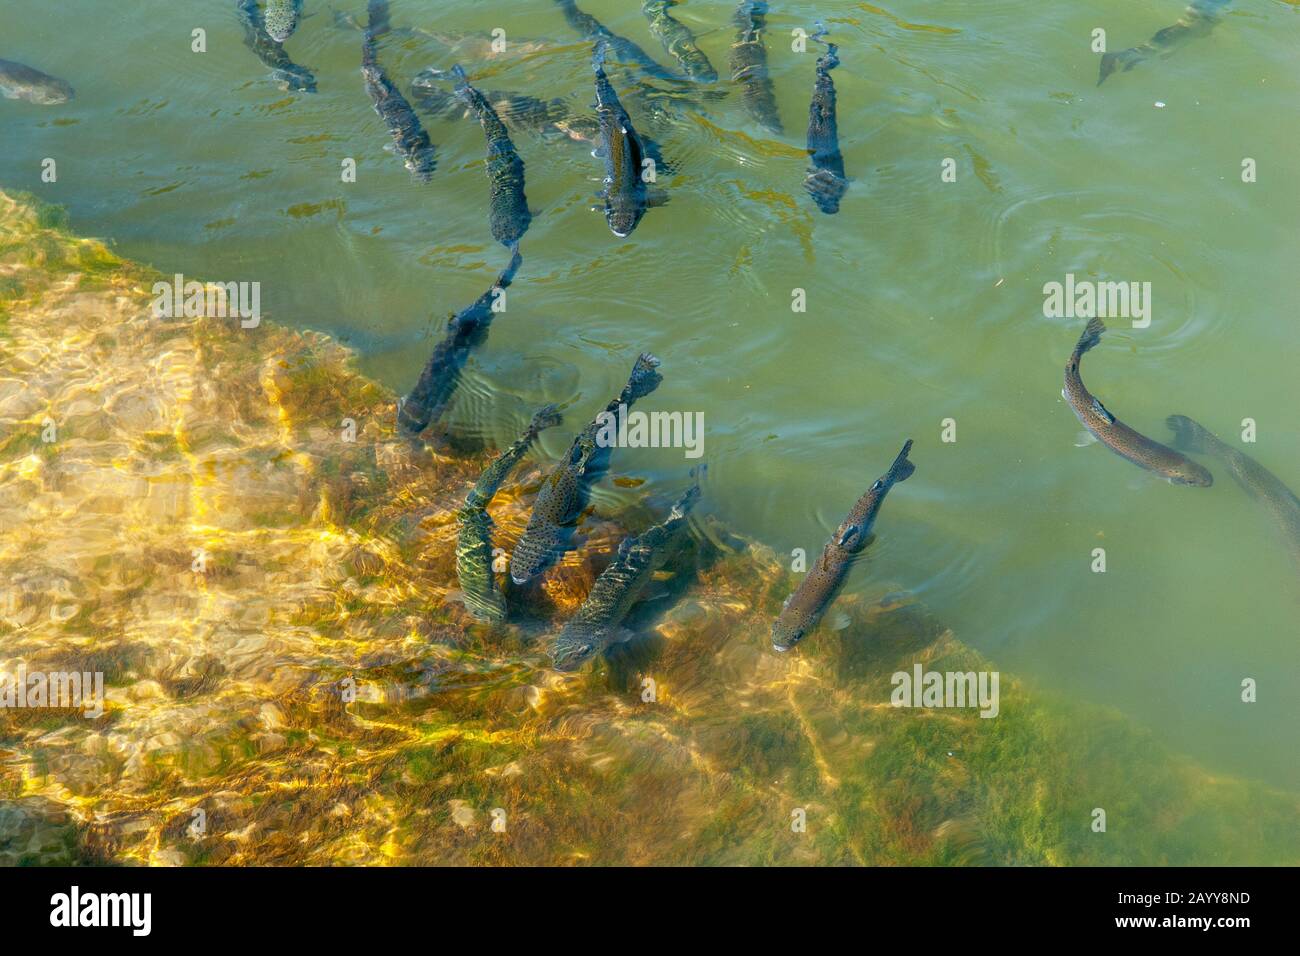 Trout in nature, underwater scene Stock Photo